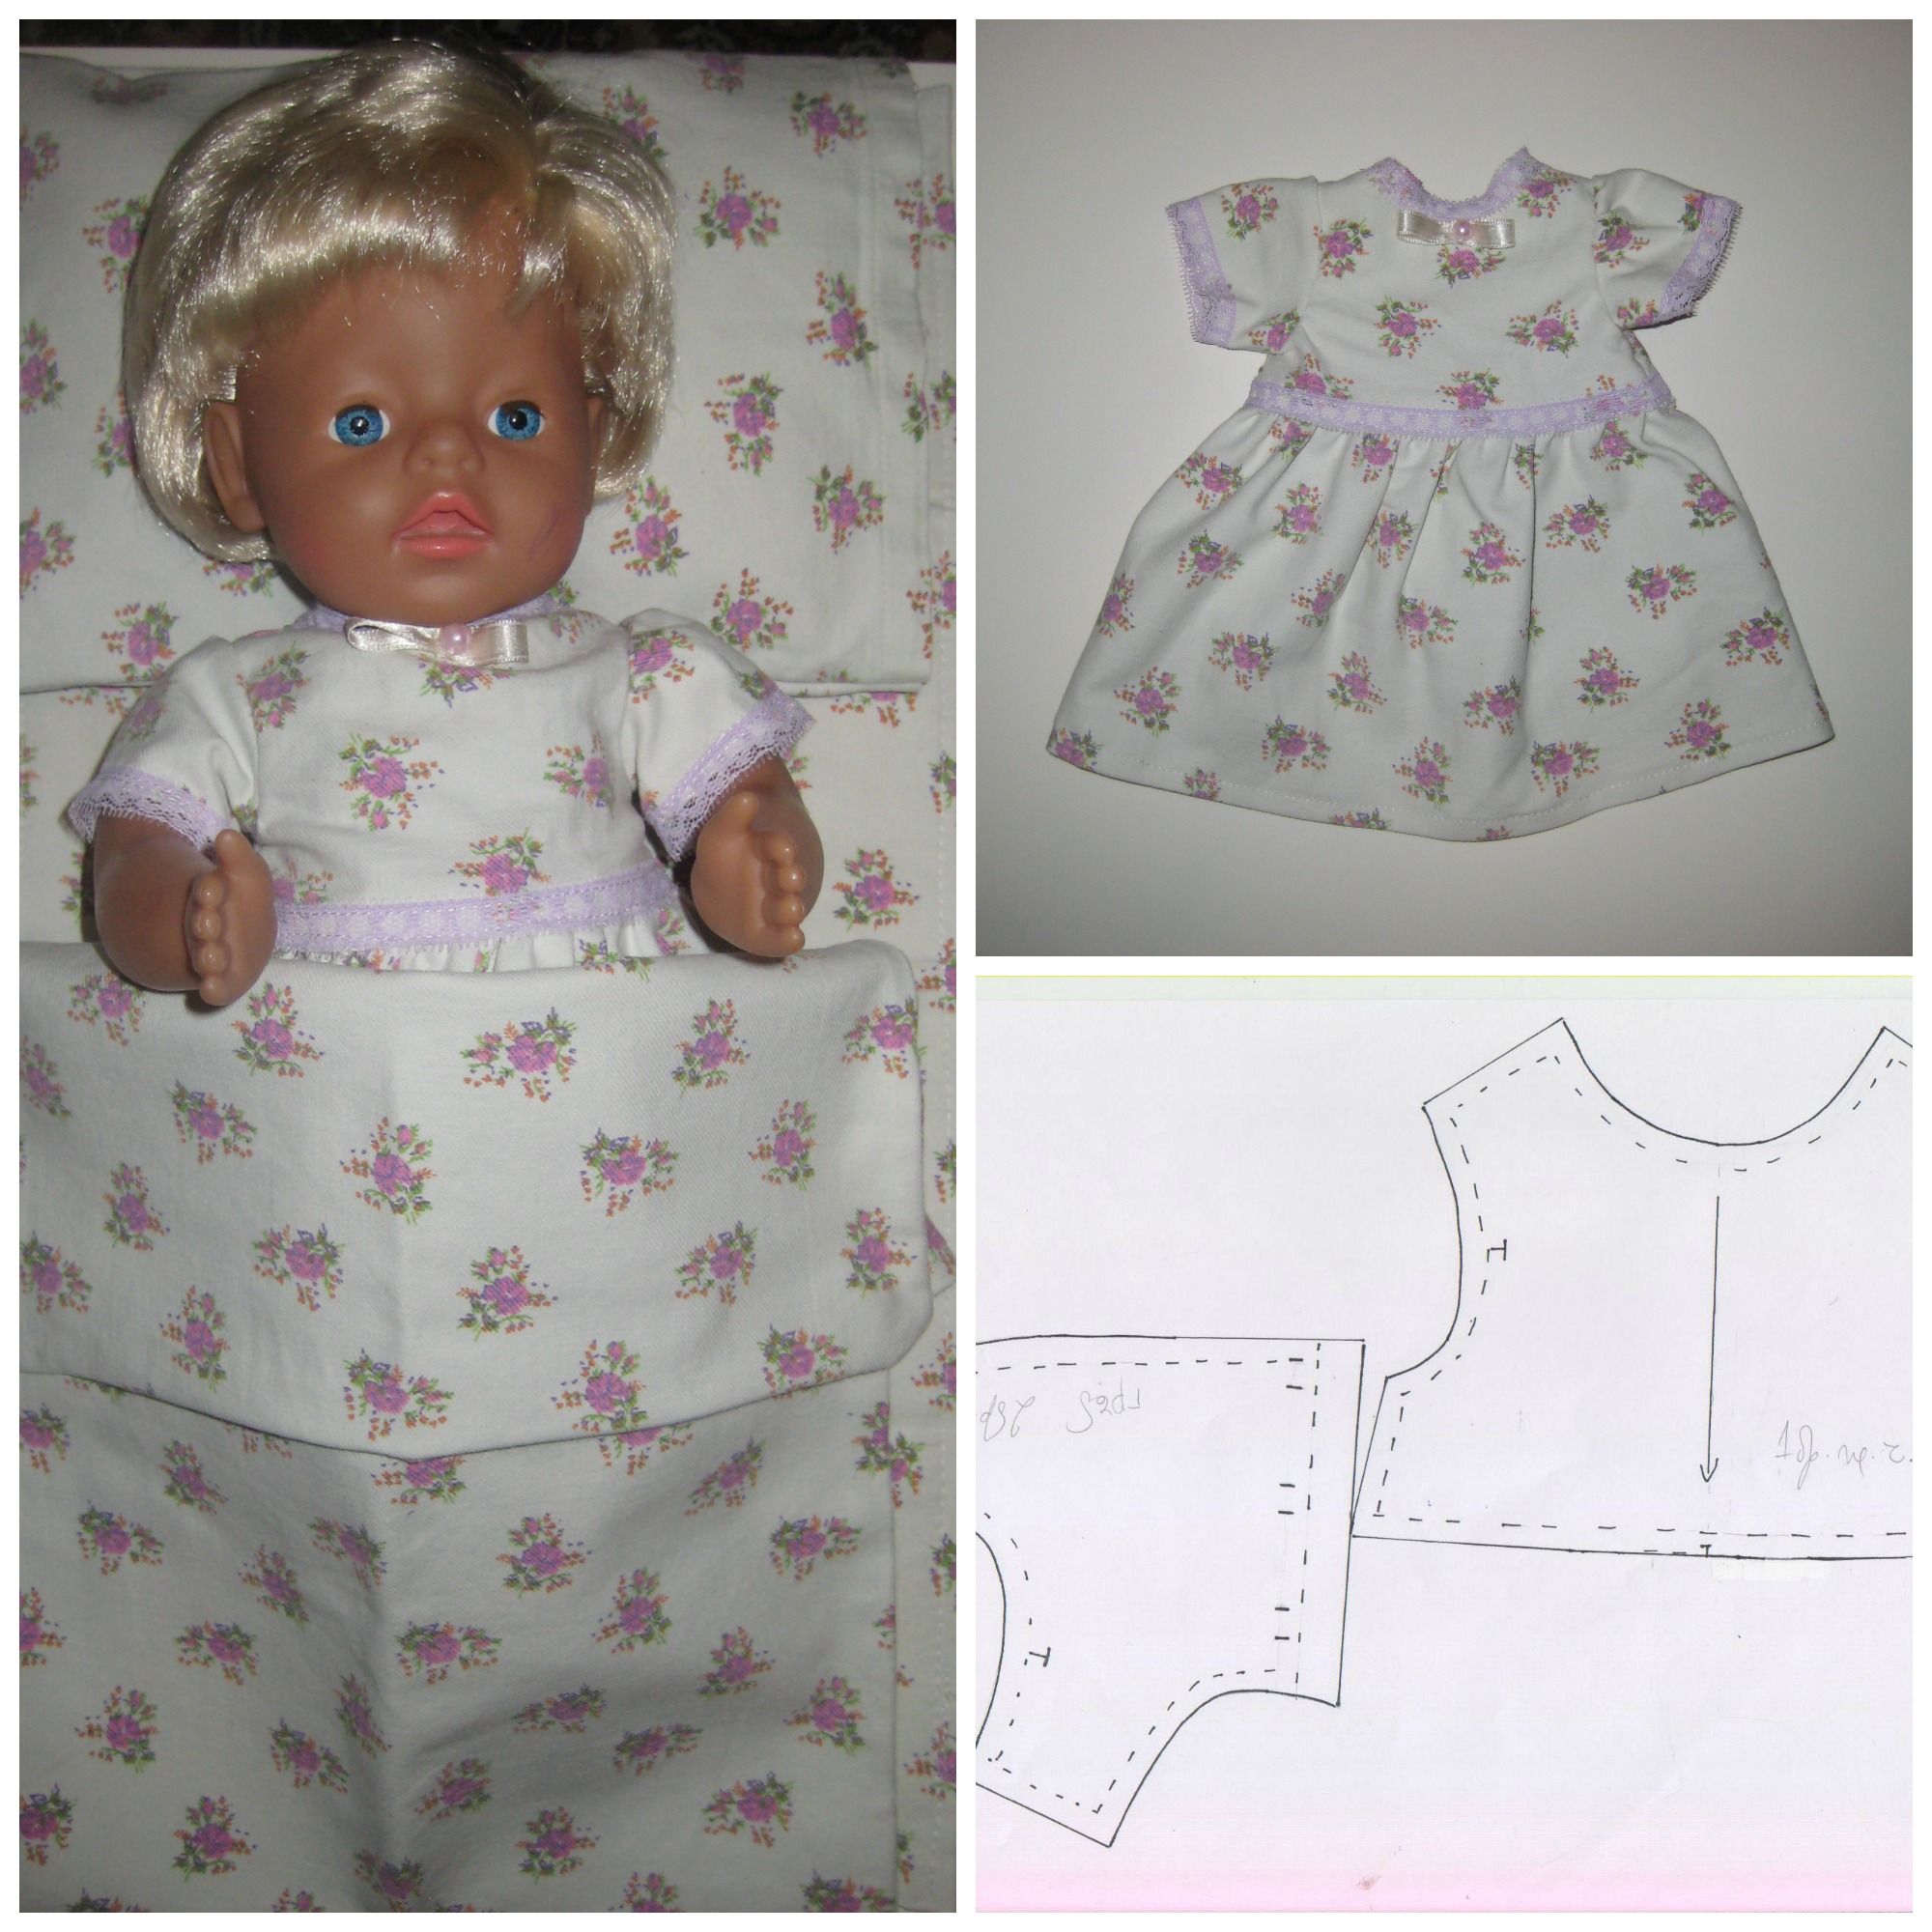 Baby sewing patterns free downloads